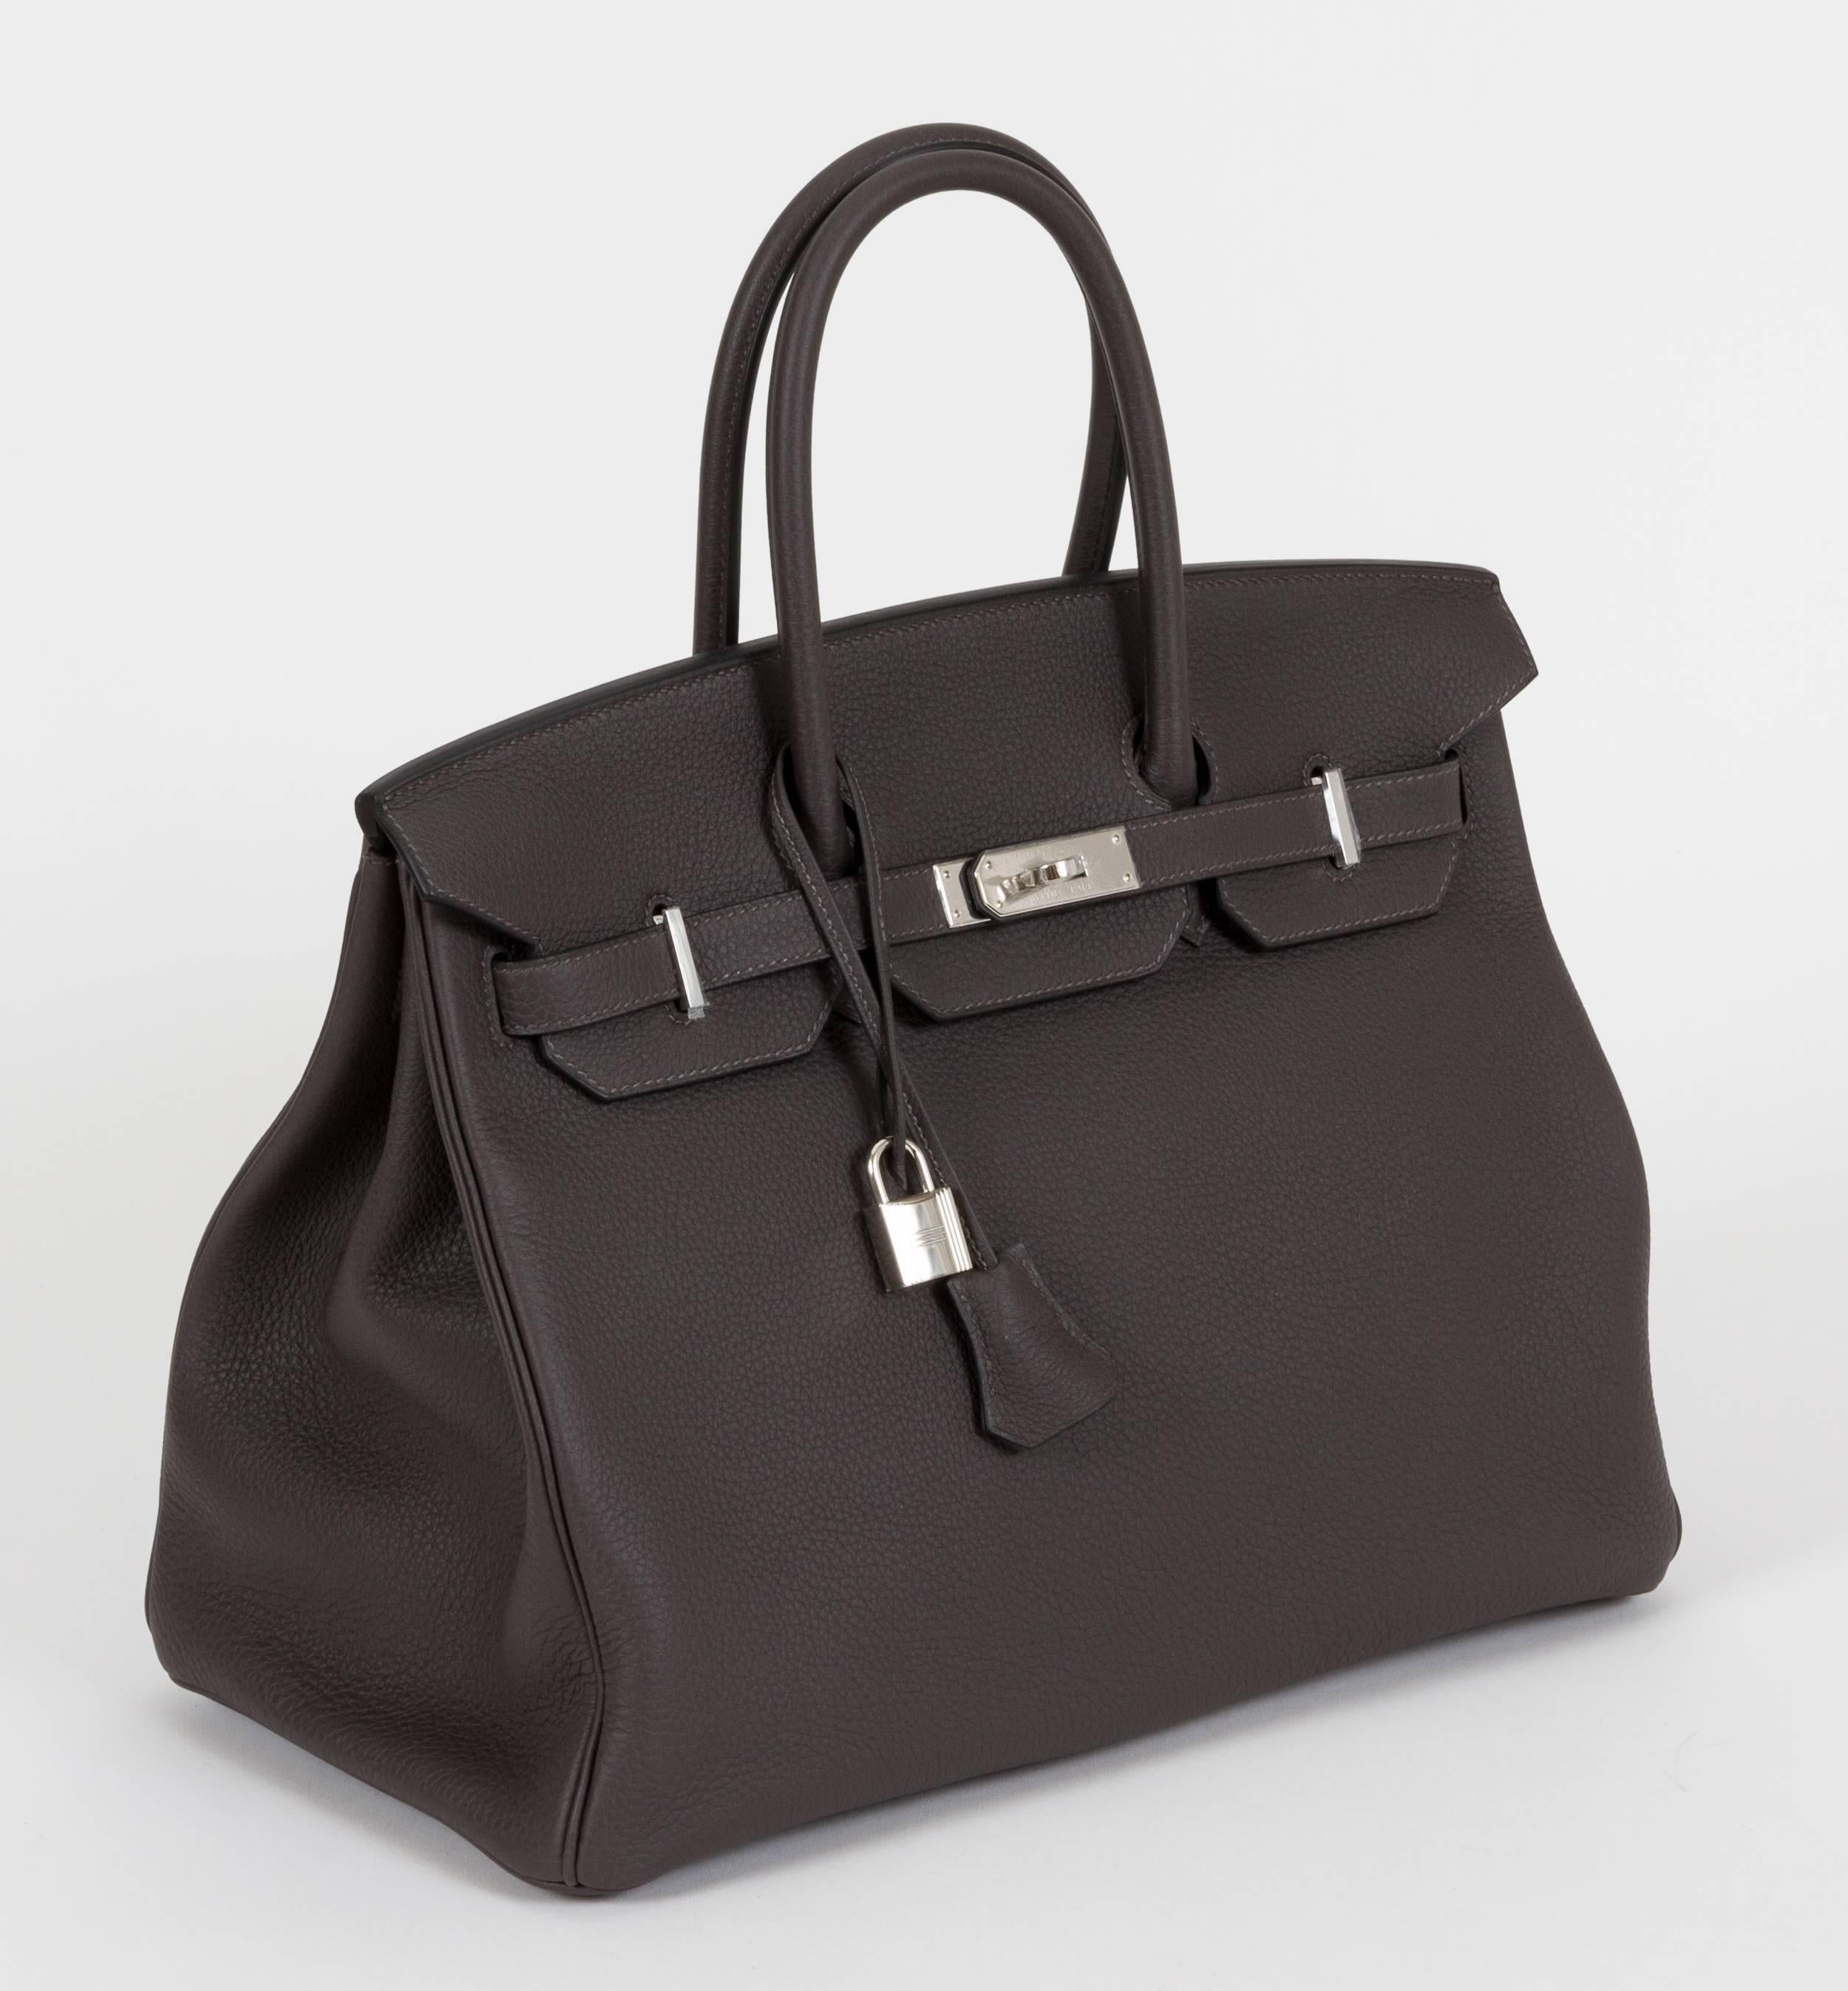 Hermès 35cm Birkin bag in etain togo leather and palladium hardware. Handle drop, 3